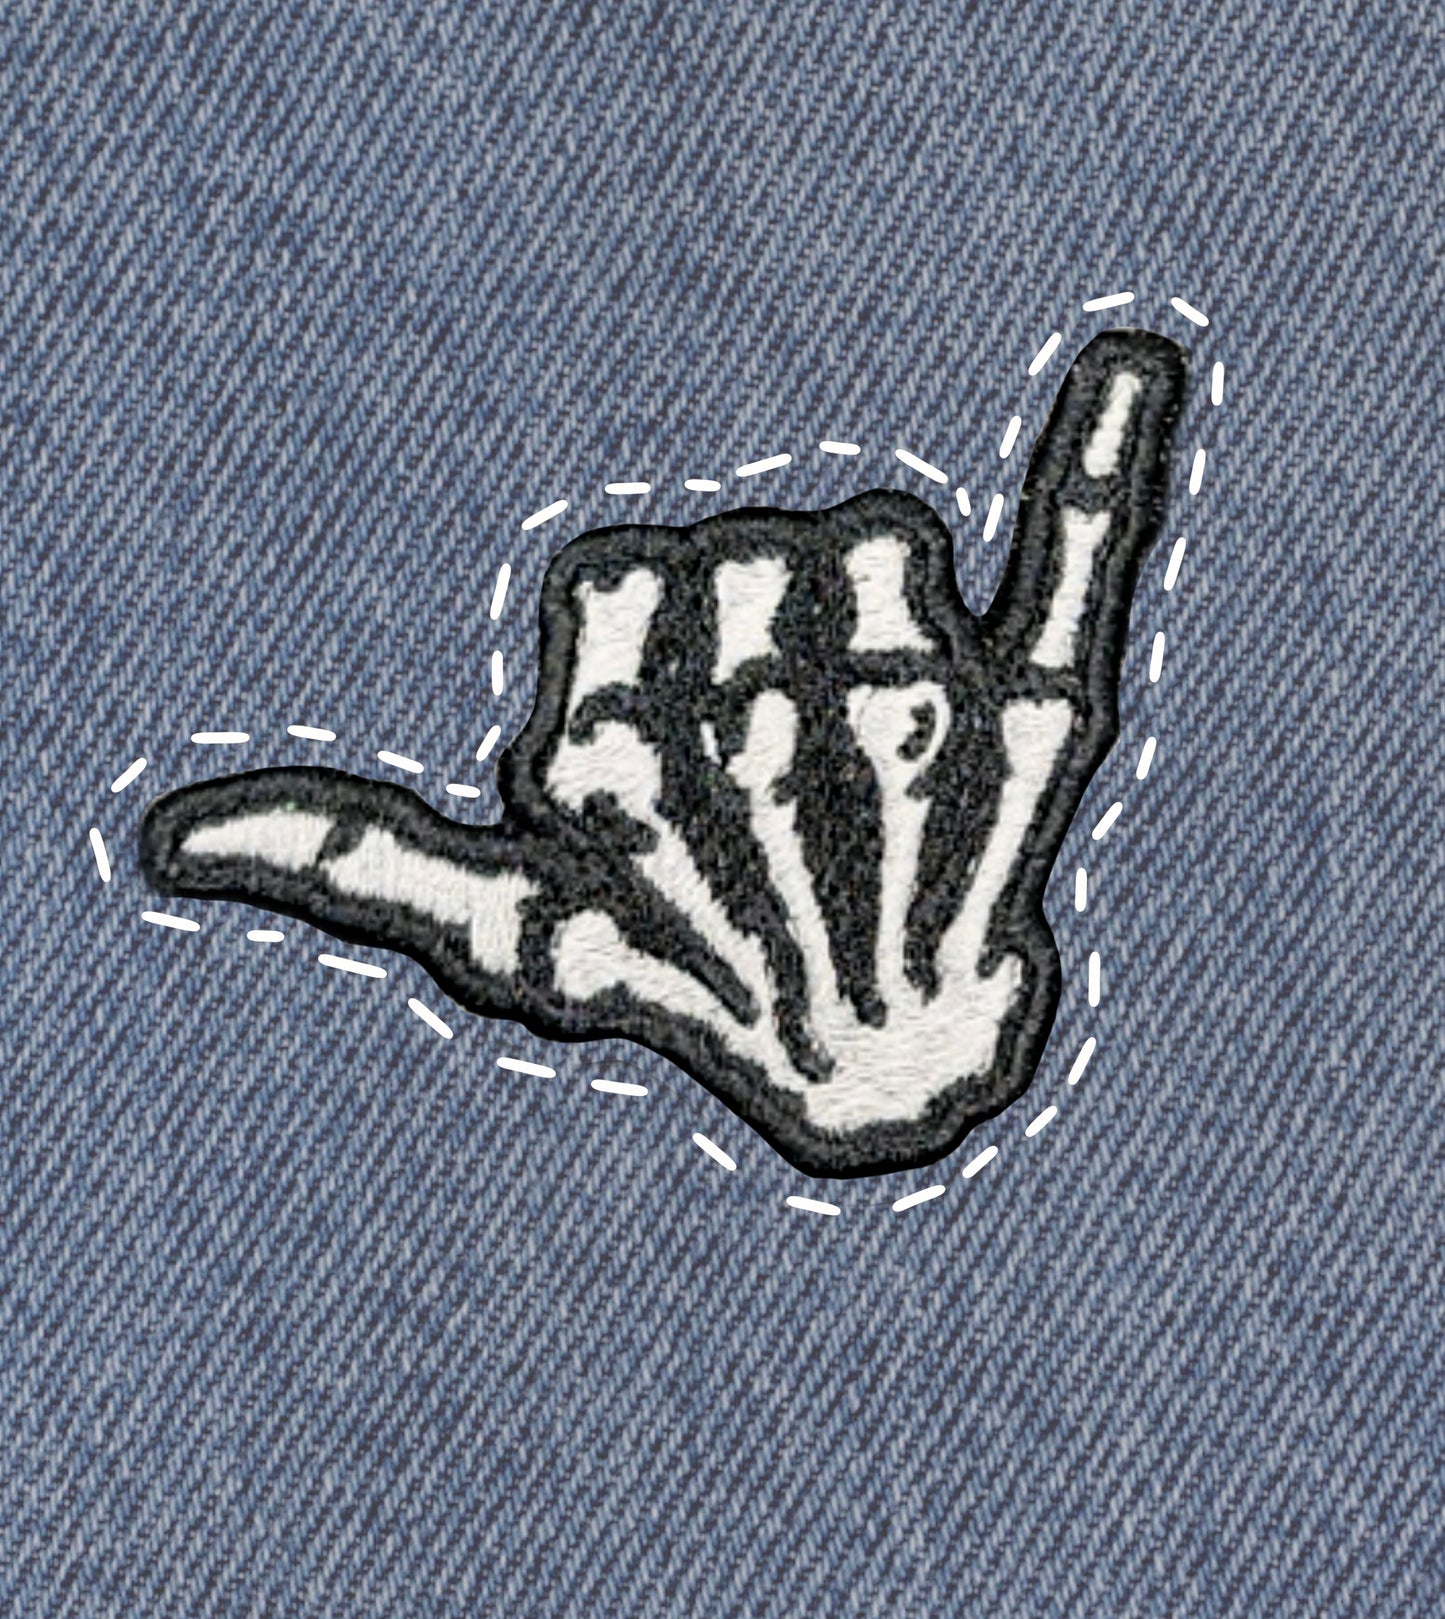 Hang loose skele hand patch